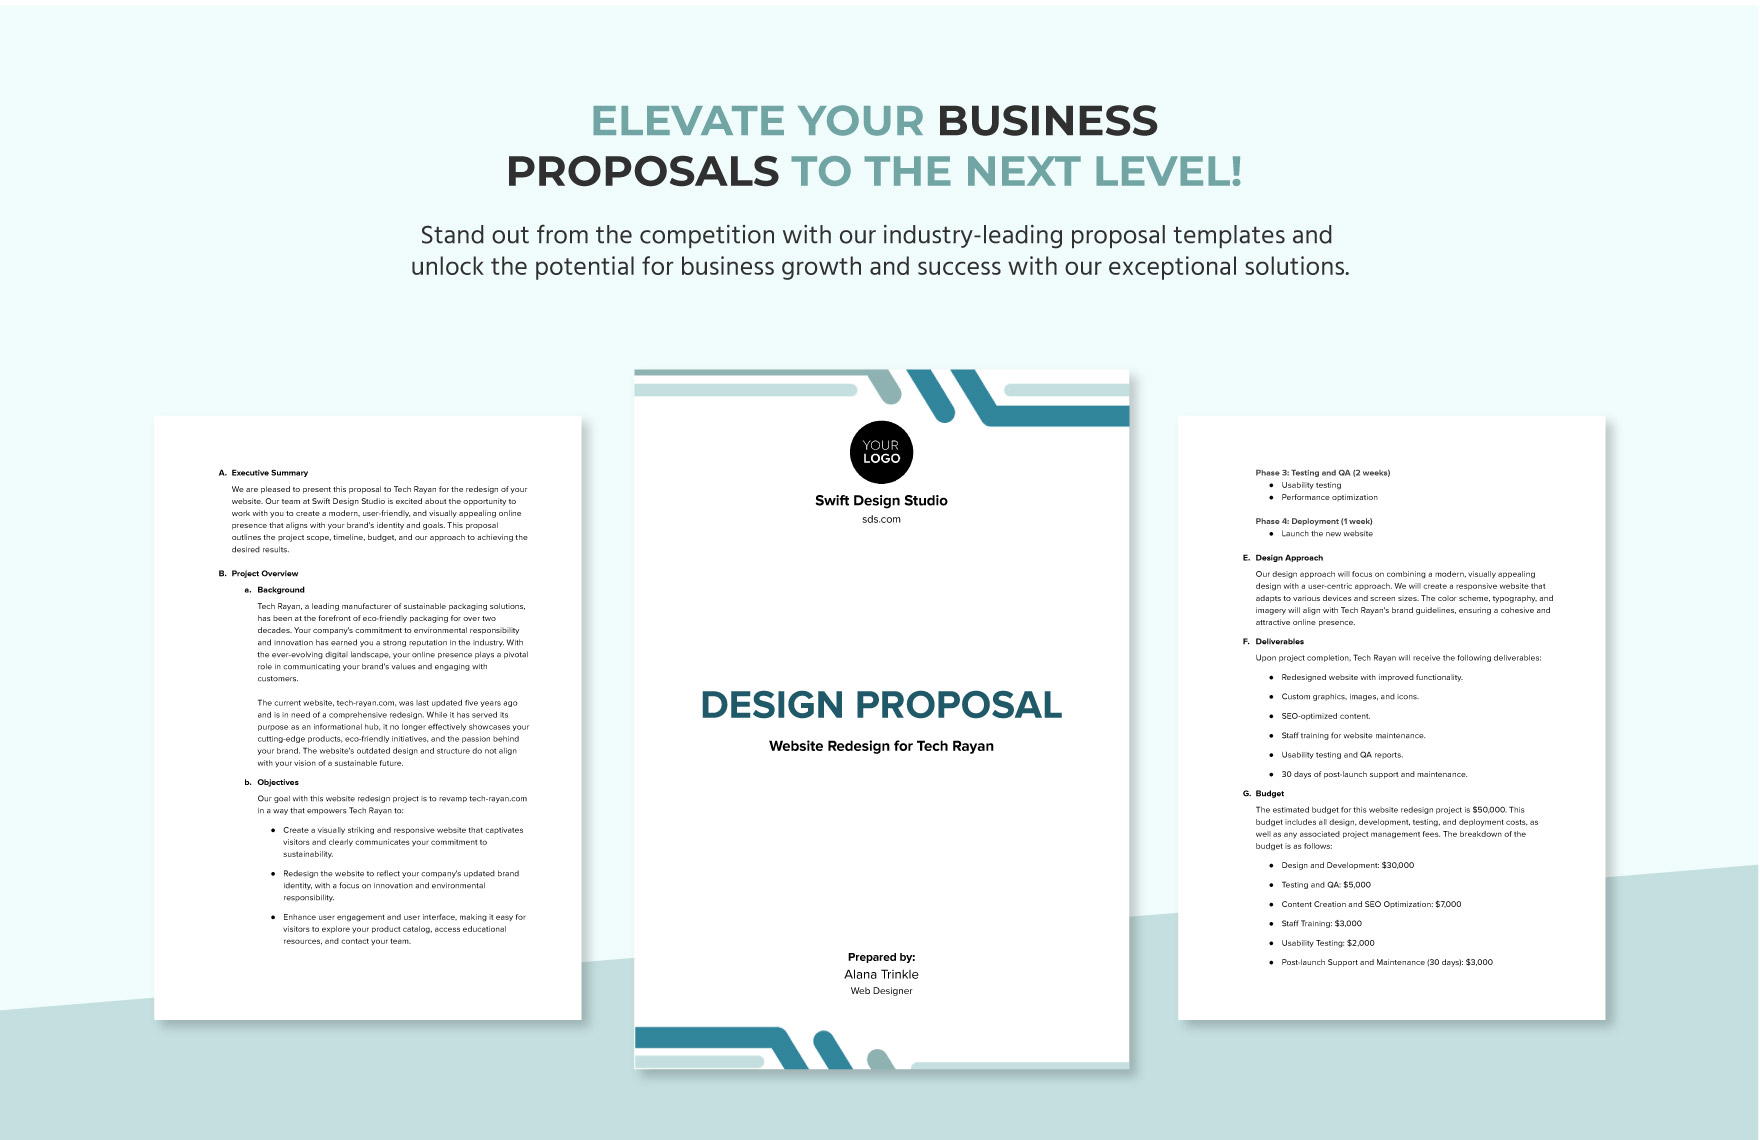 Design Proposal Template